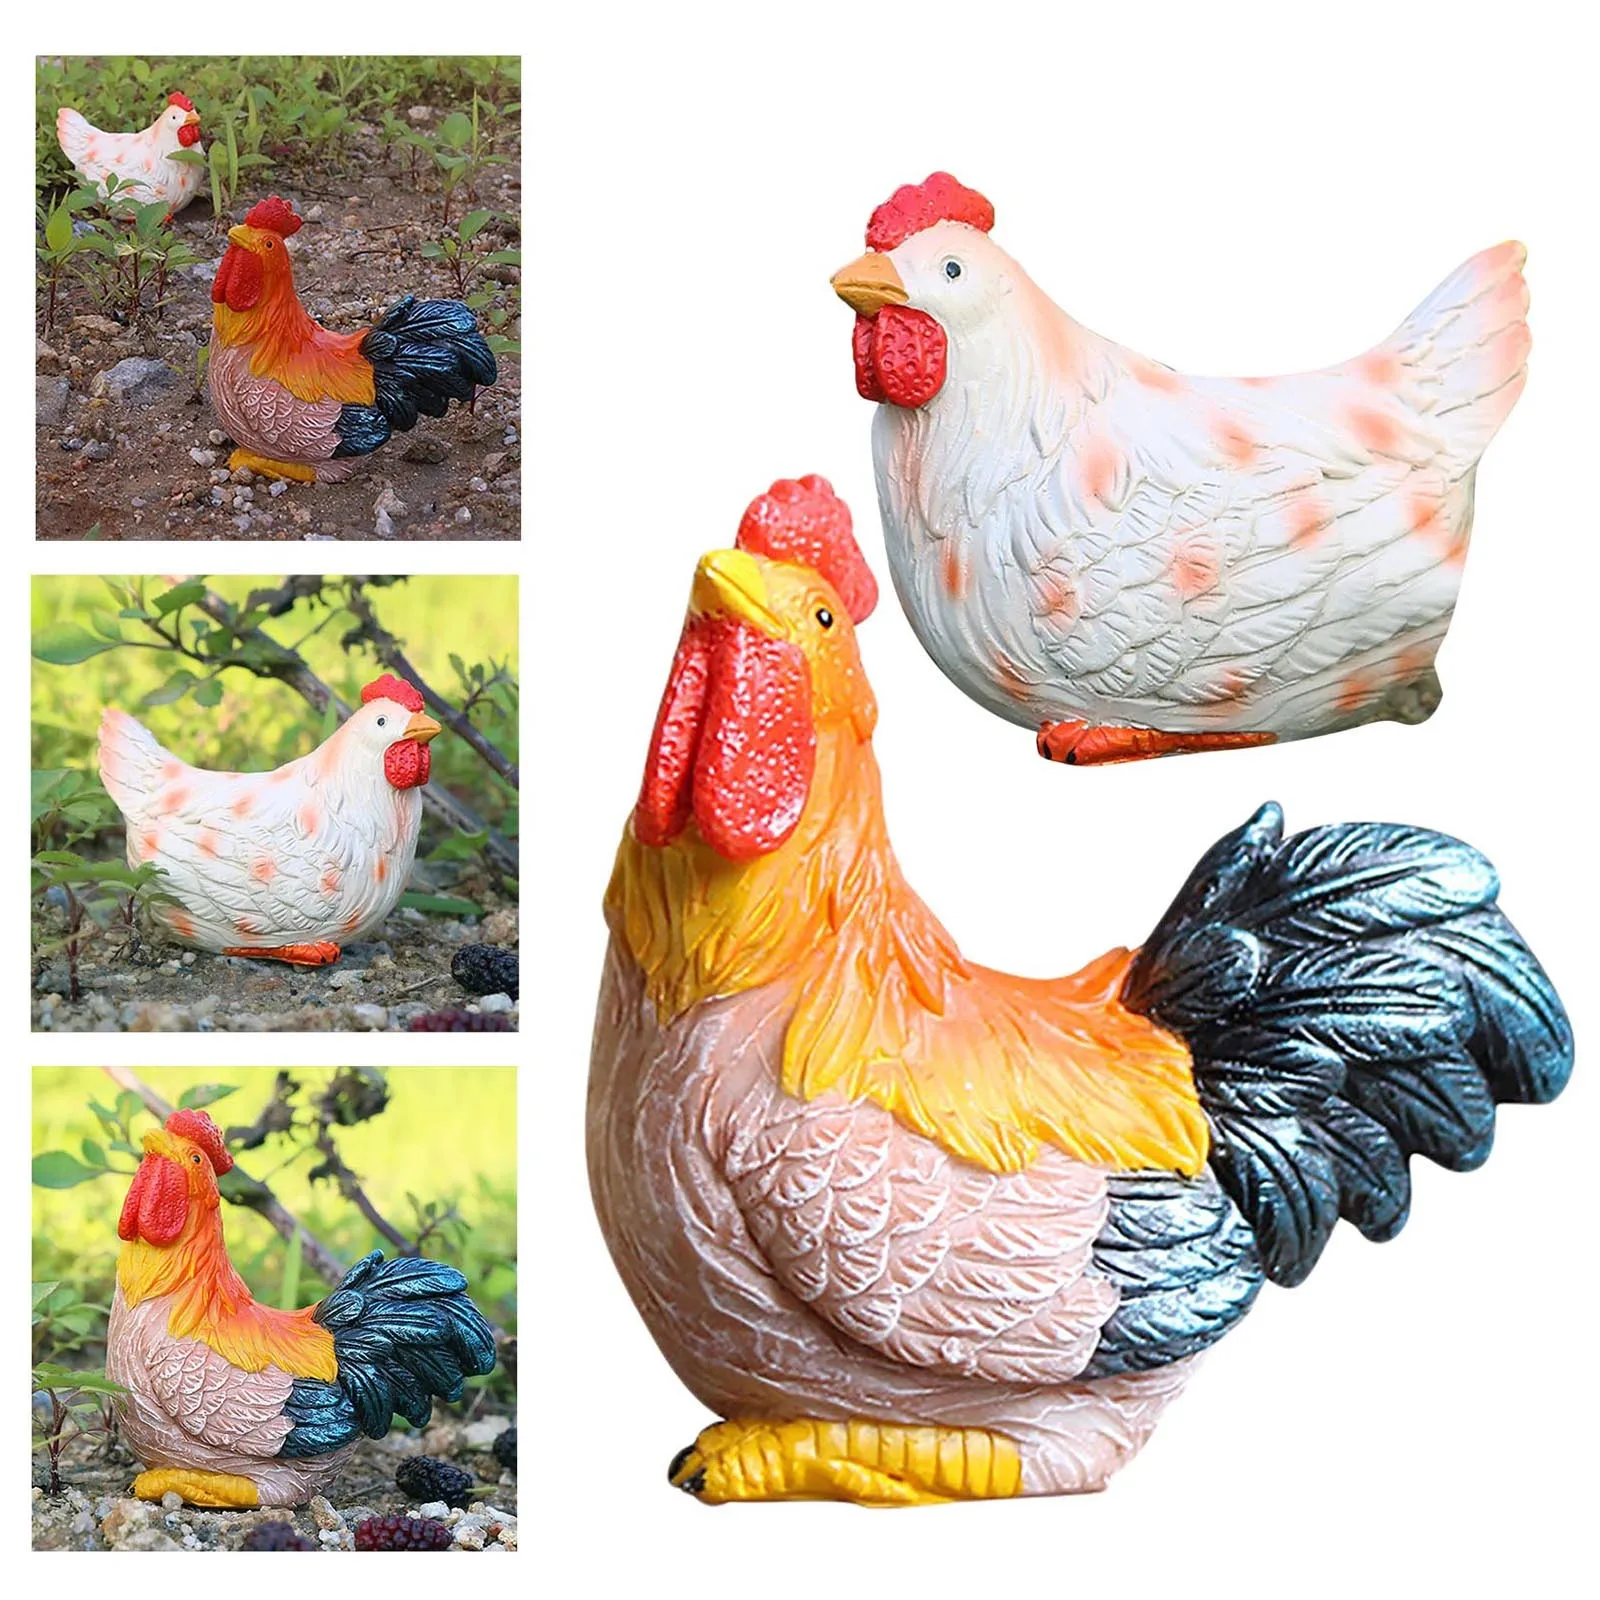 1x Artificial Realistic Chicken and Egg Figure Outdoor Garden Home Decorative 